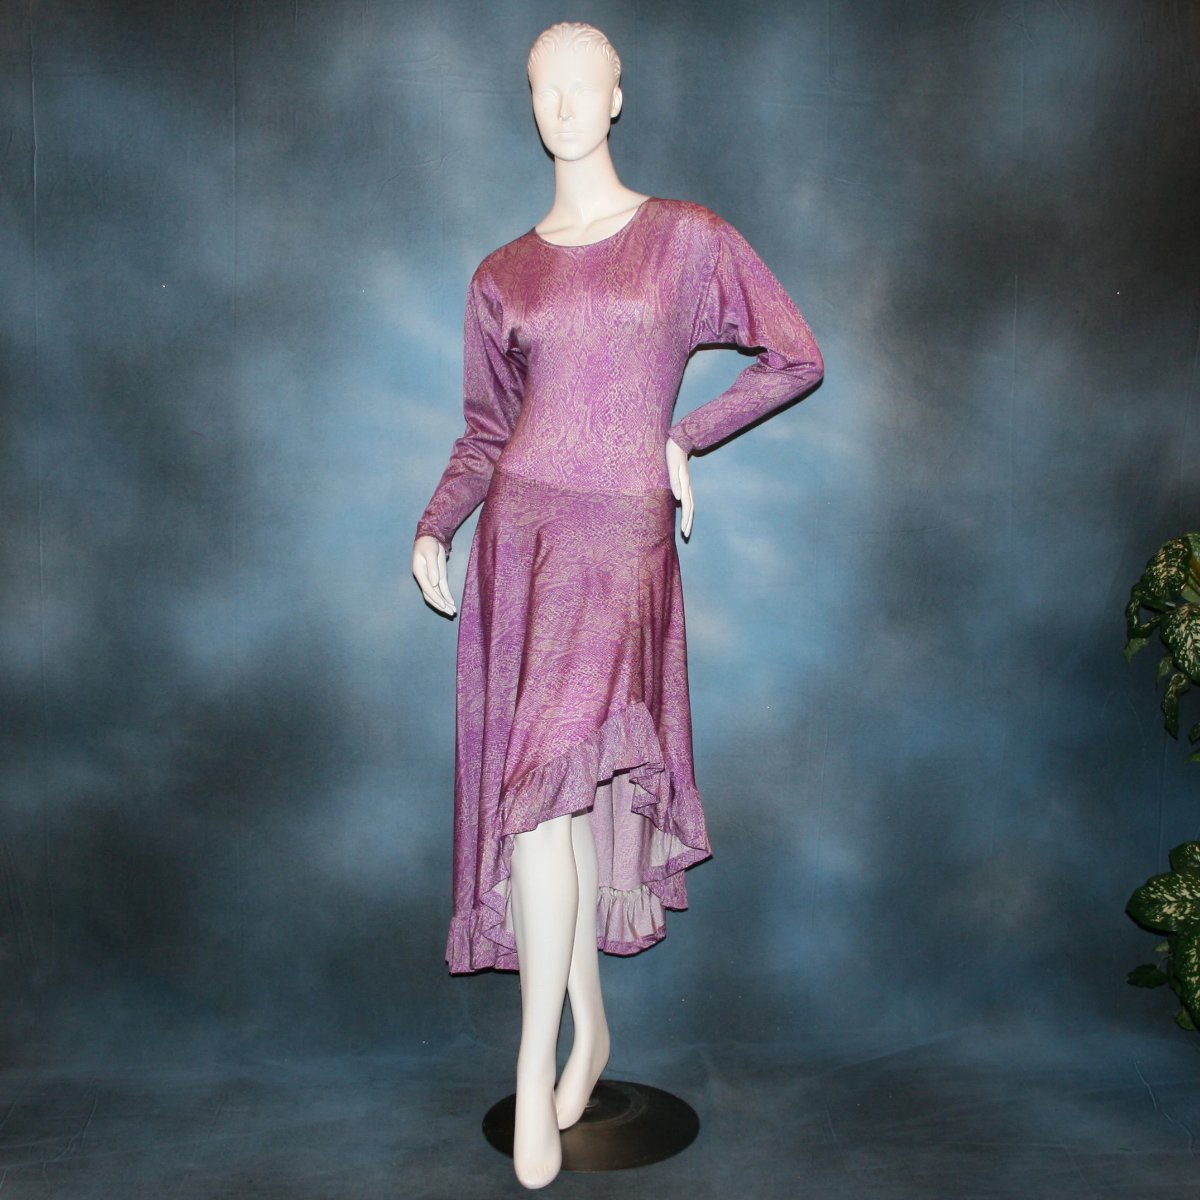 Purple bodysuit with ruffled Latin/rhythm skirt of reptilia purple print lycra, with a slight iridescent sheen, great for any ballroom dance, ballroom teachers or practice.